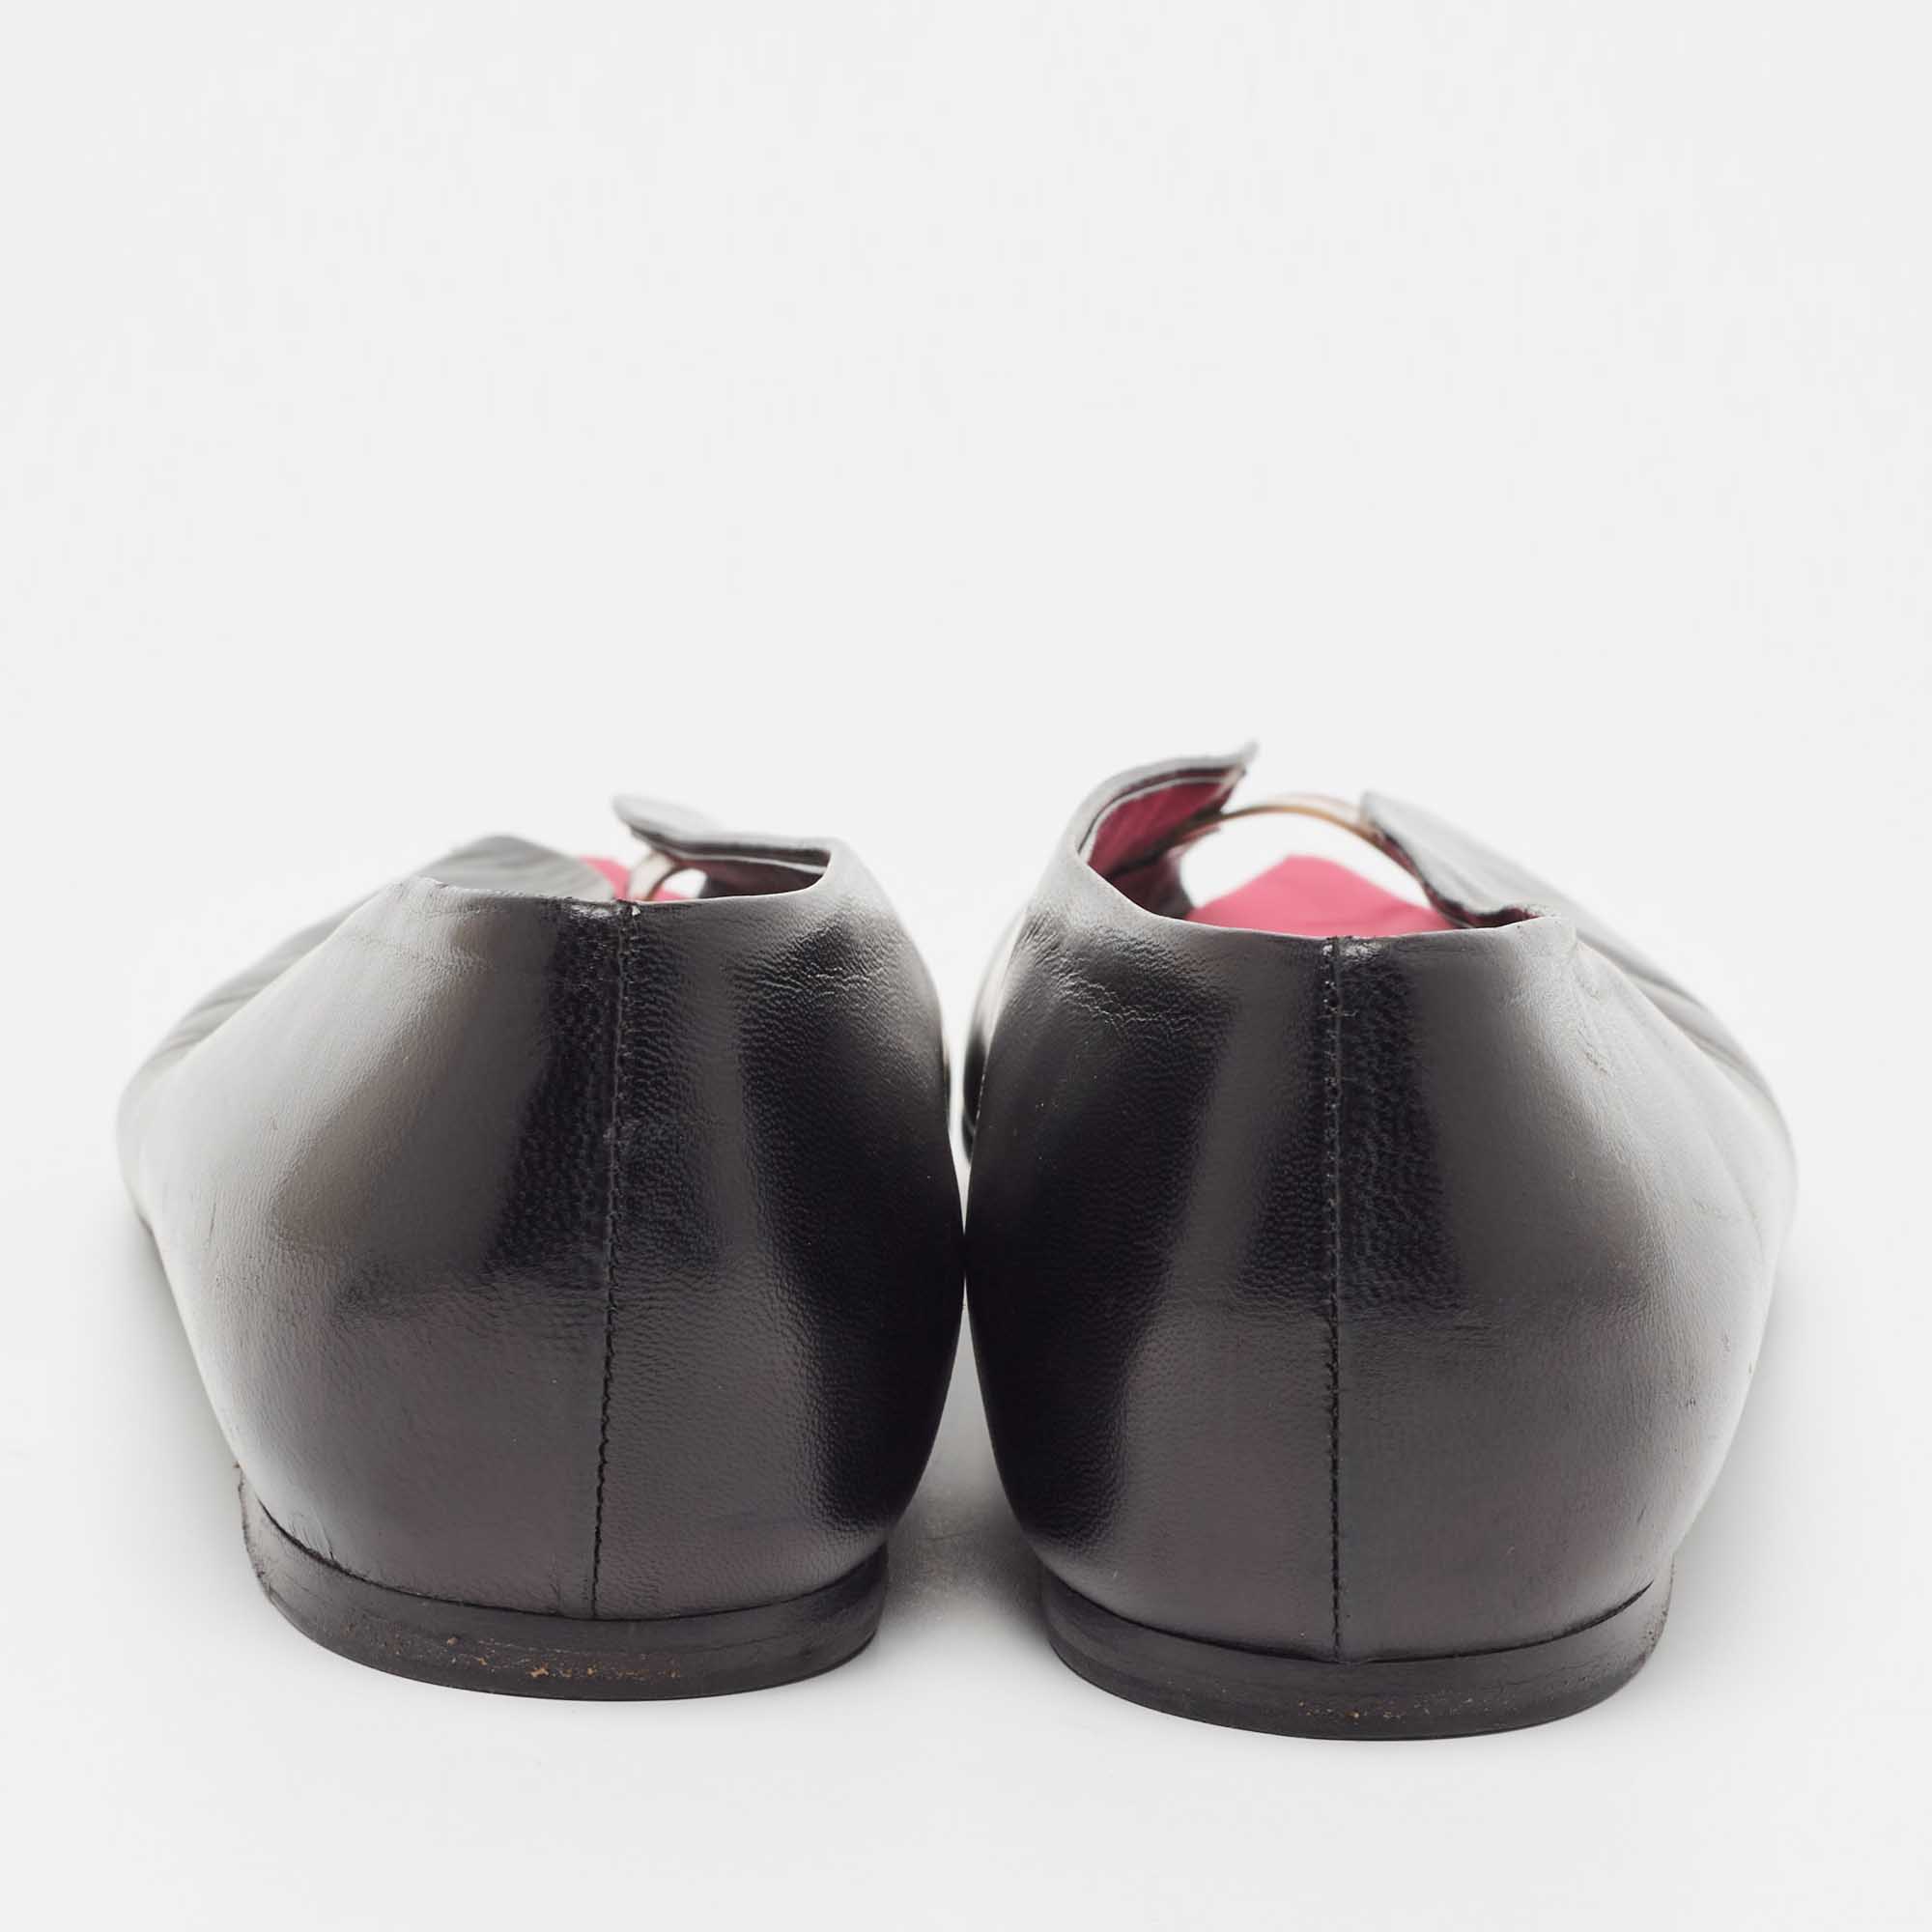 Balenciaga Black Leather Open Toe Ballet Flats Size 36.5